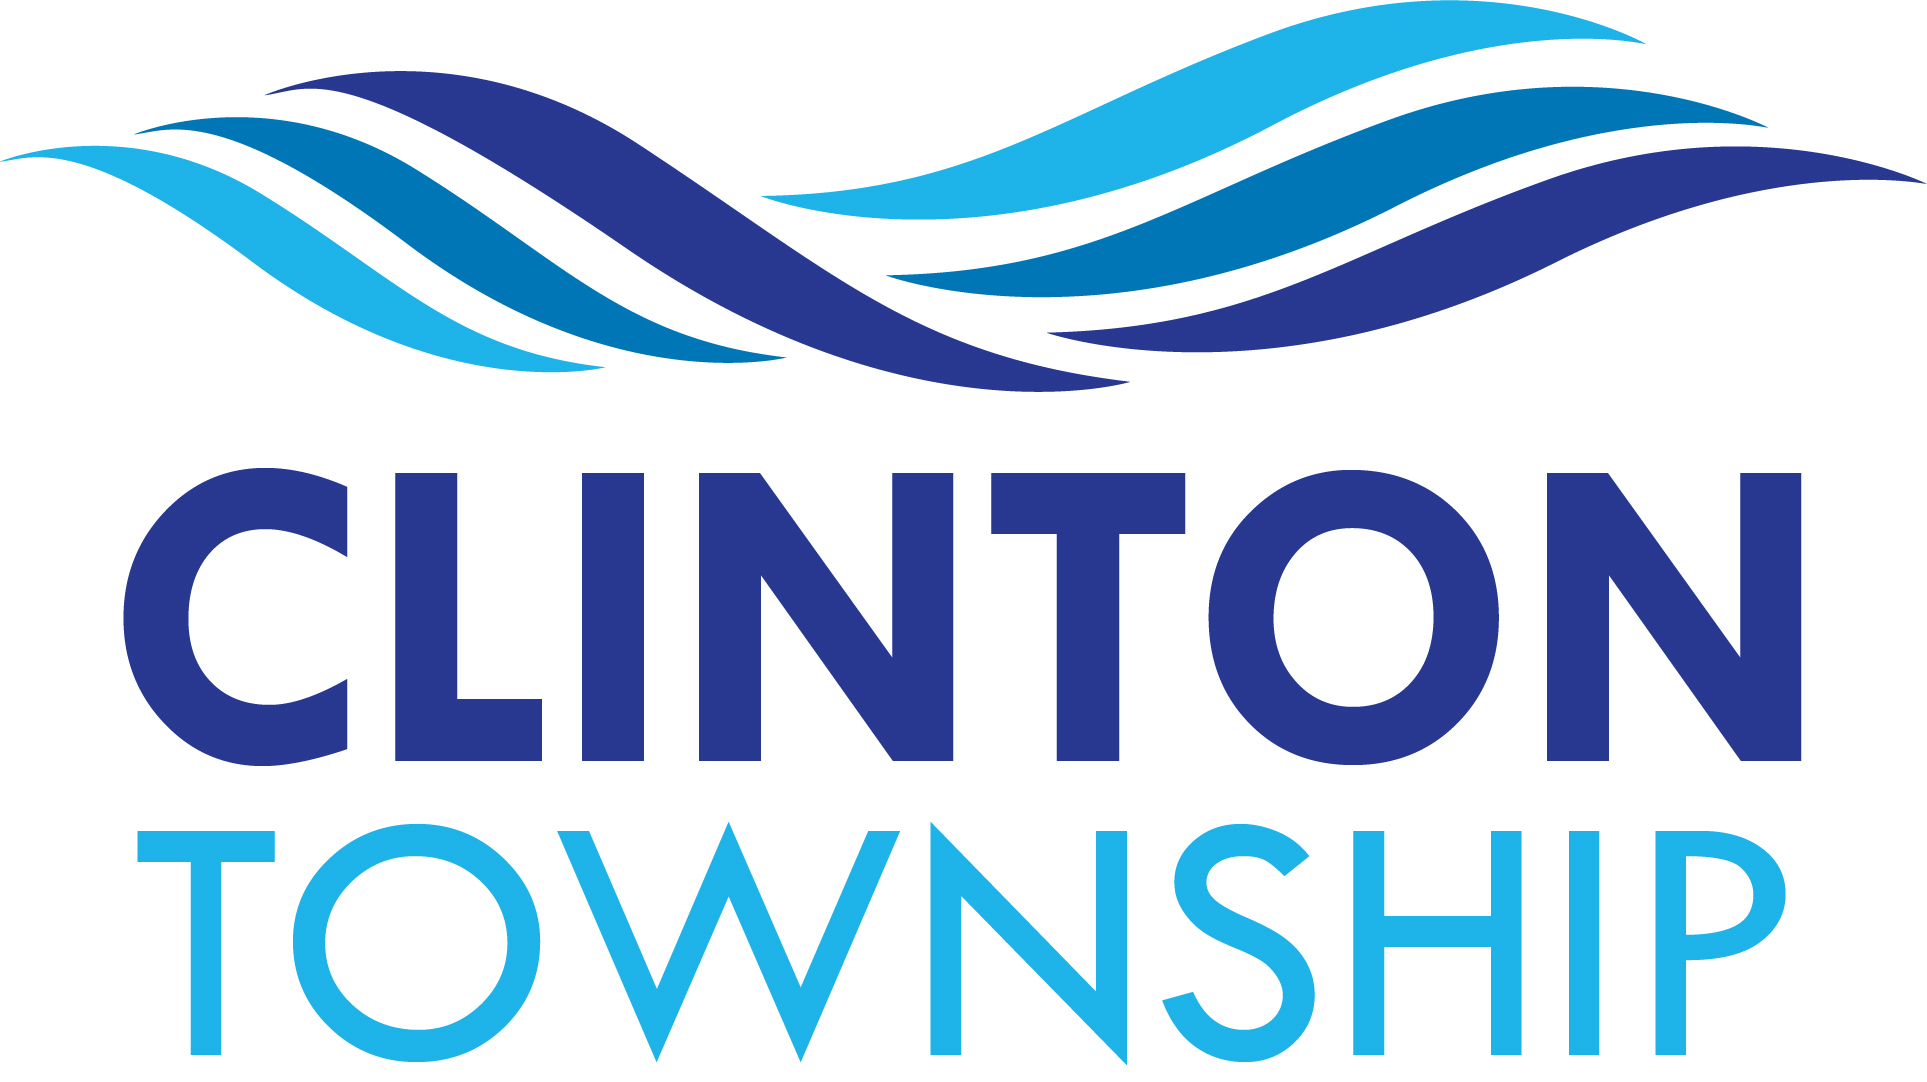 Organization logo of Charter Township of Clinton